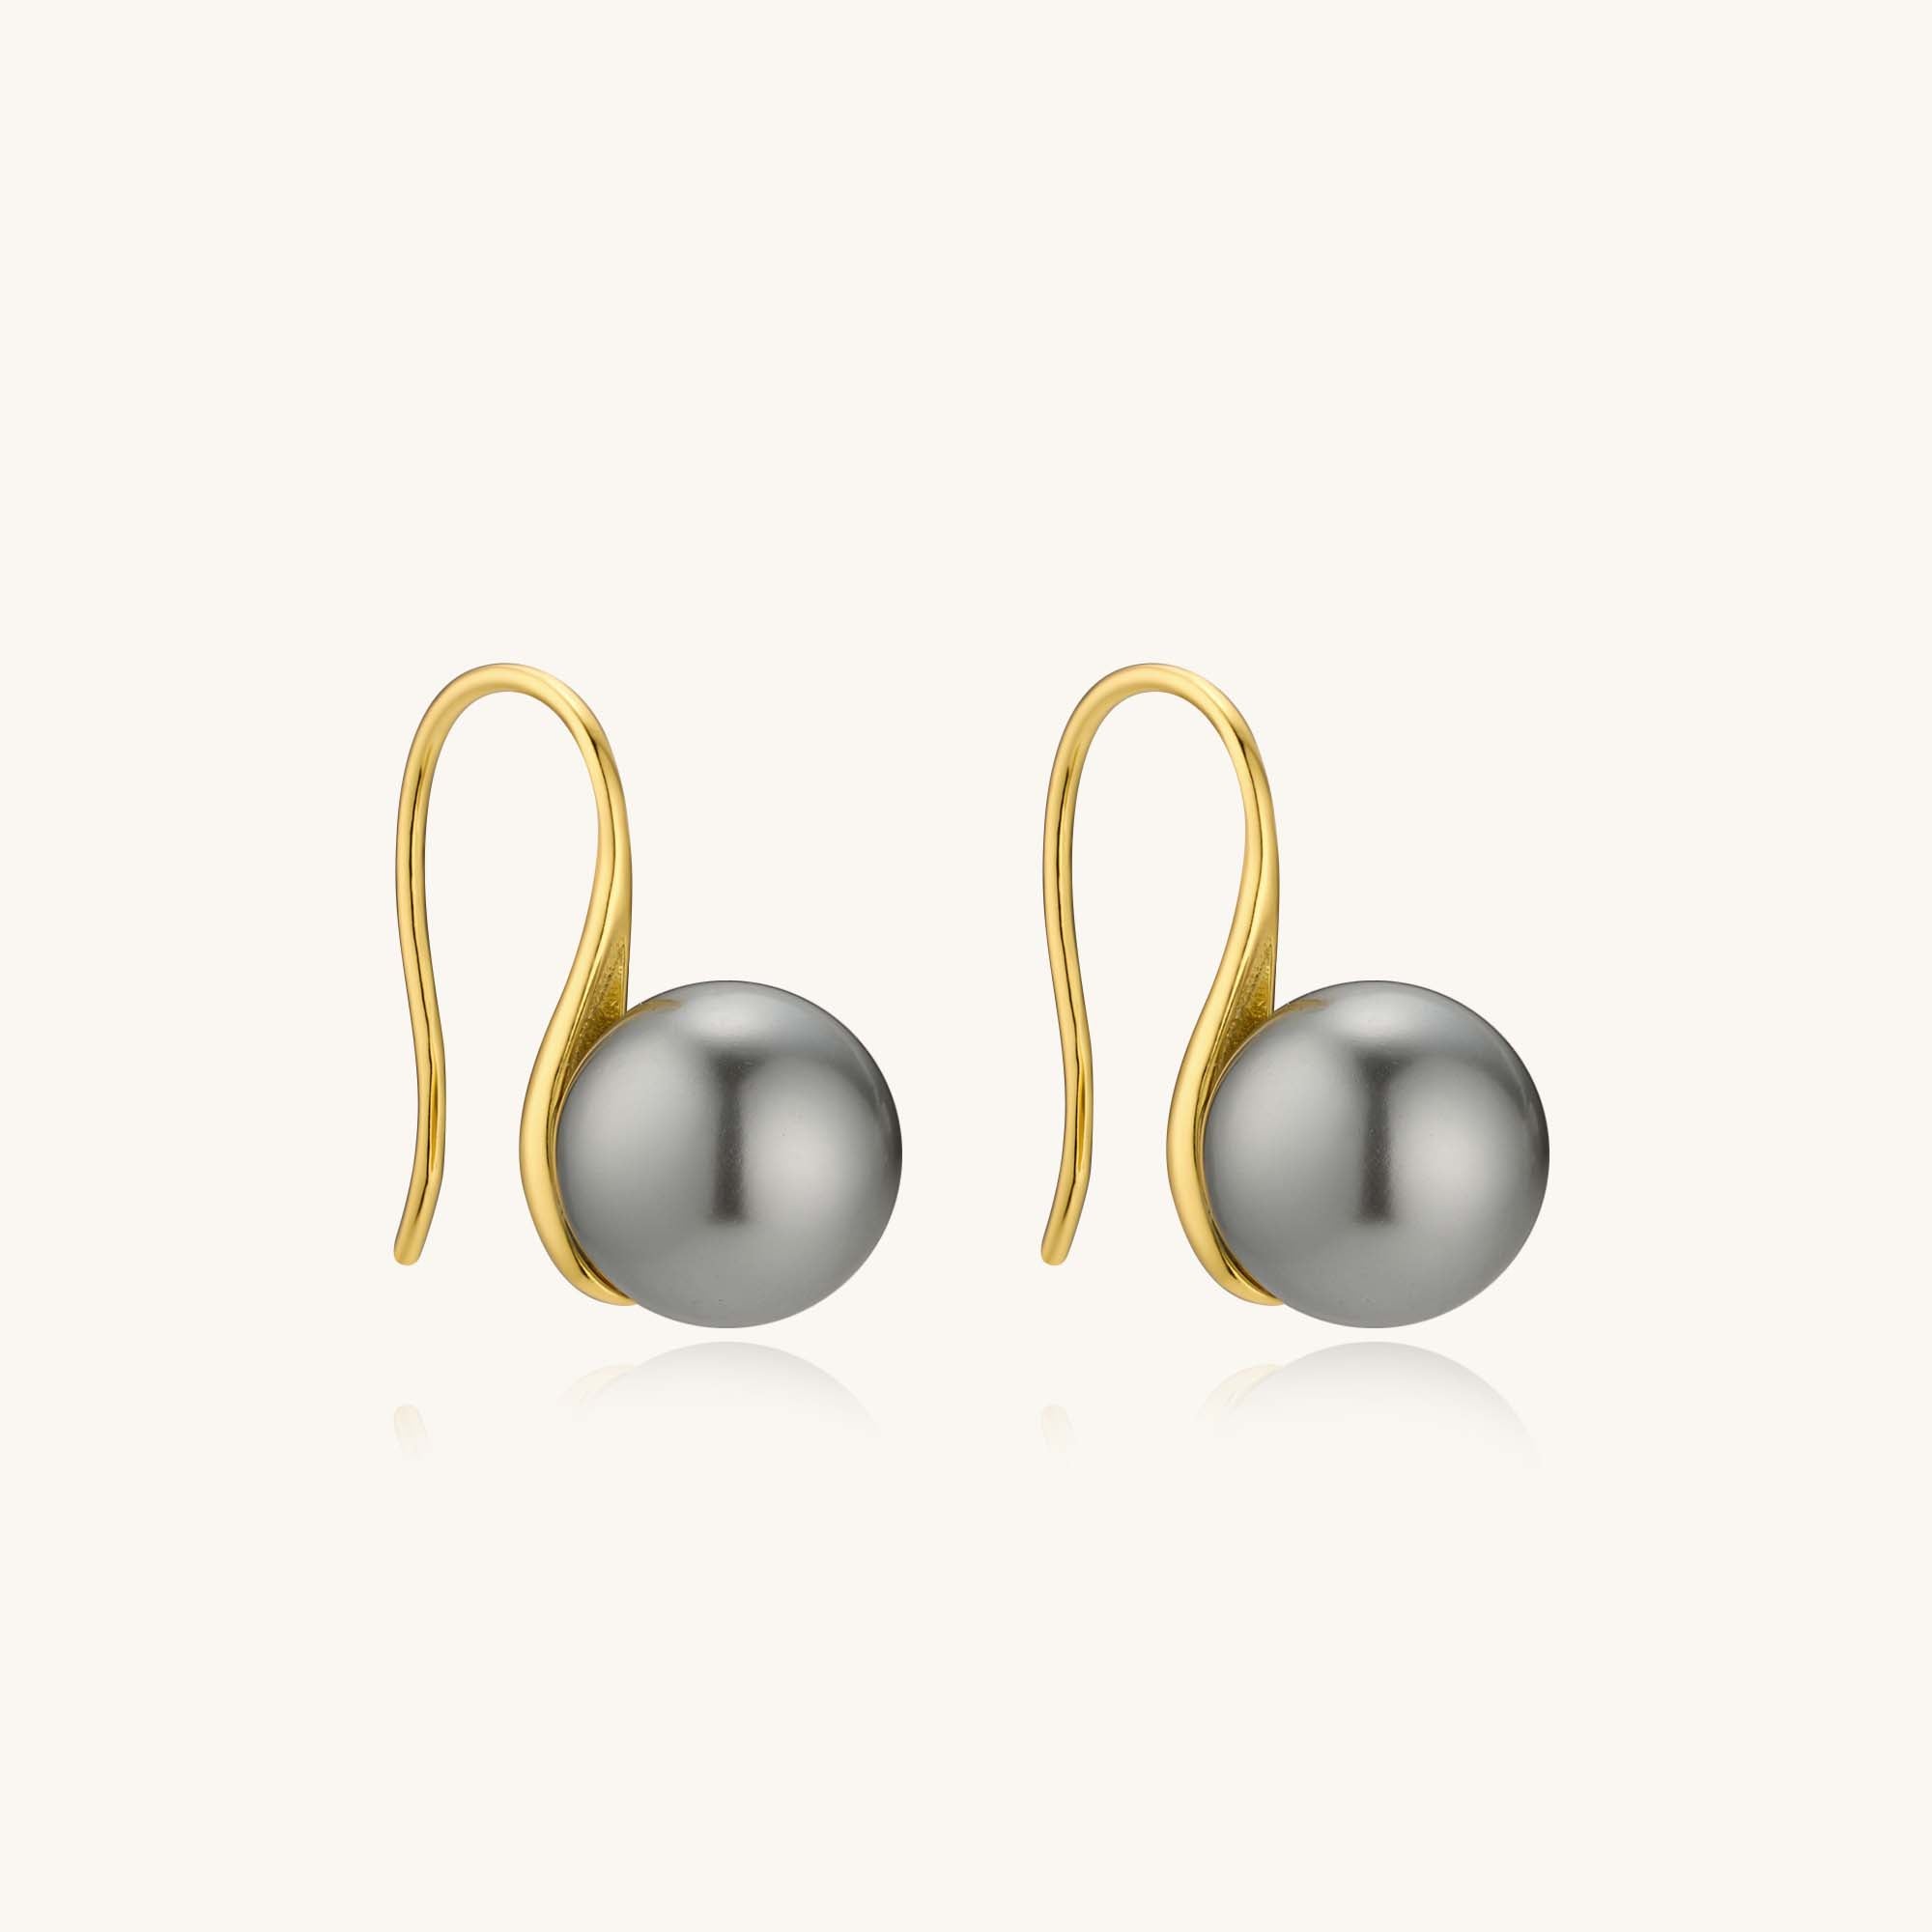 Coisini Pearl Earrings - Kira LaLa